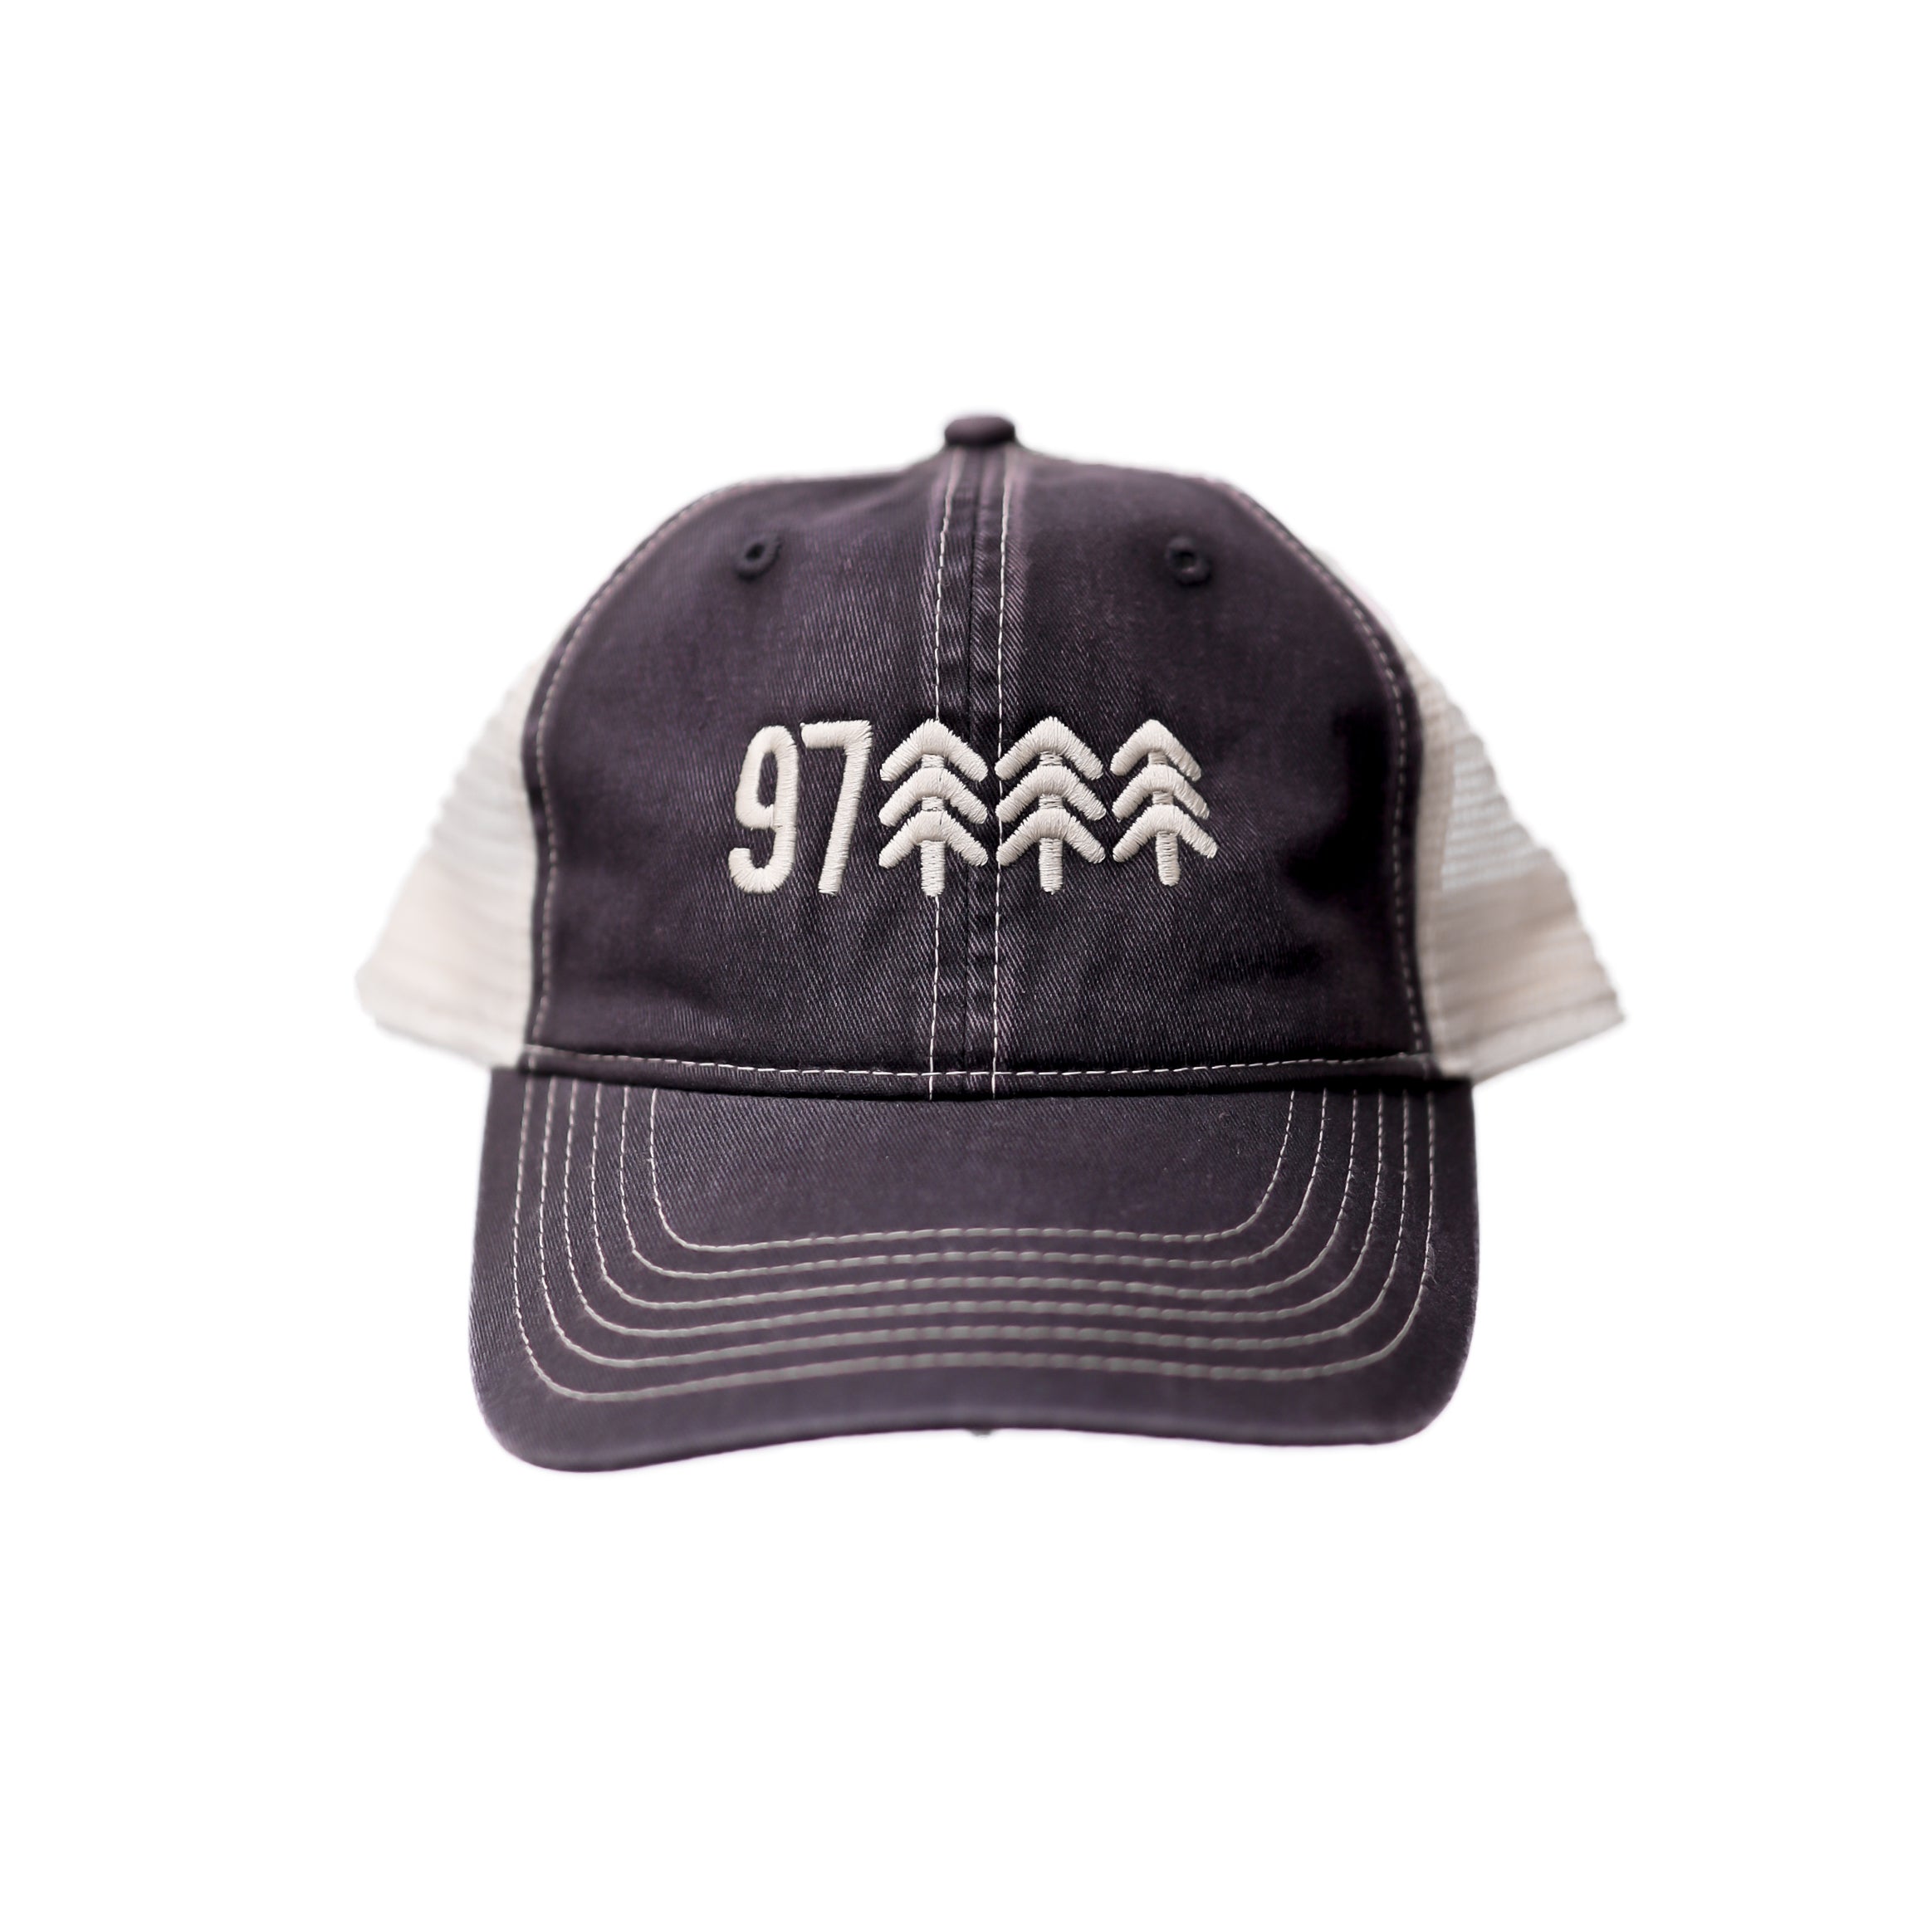 97🌲🌲🌲 Vintage Mesh Trucker Hat